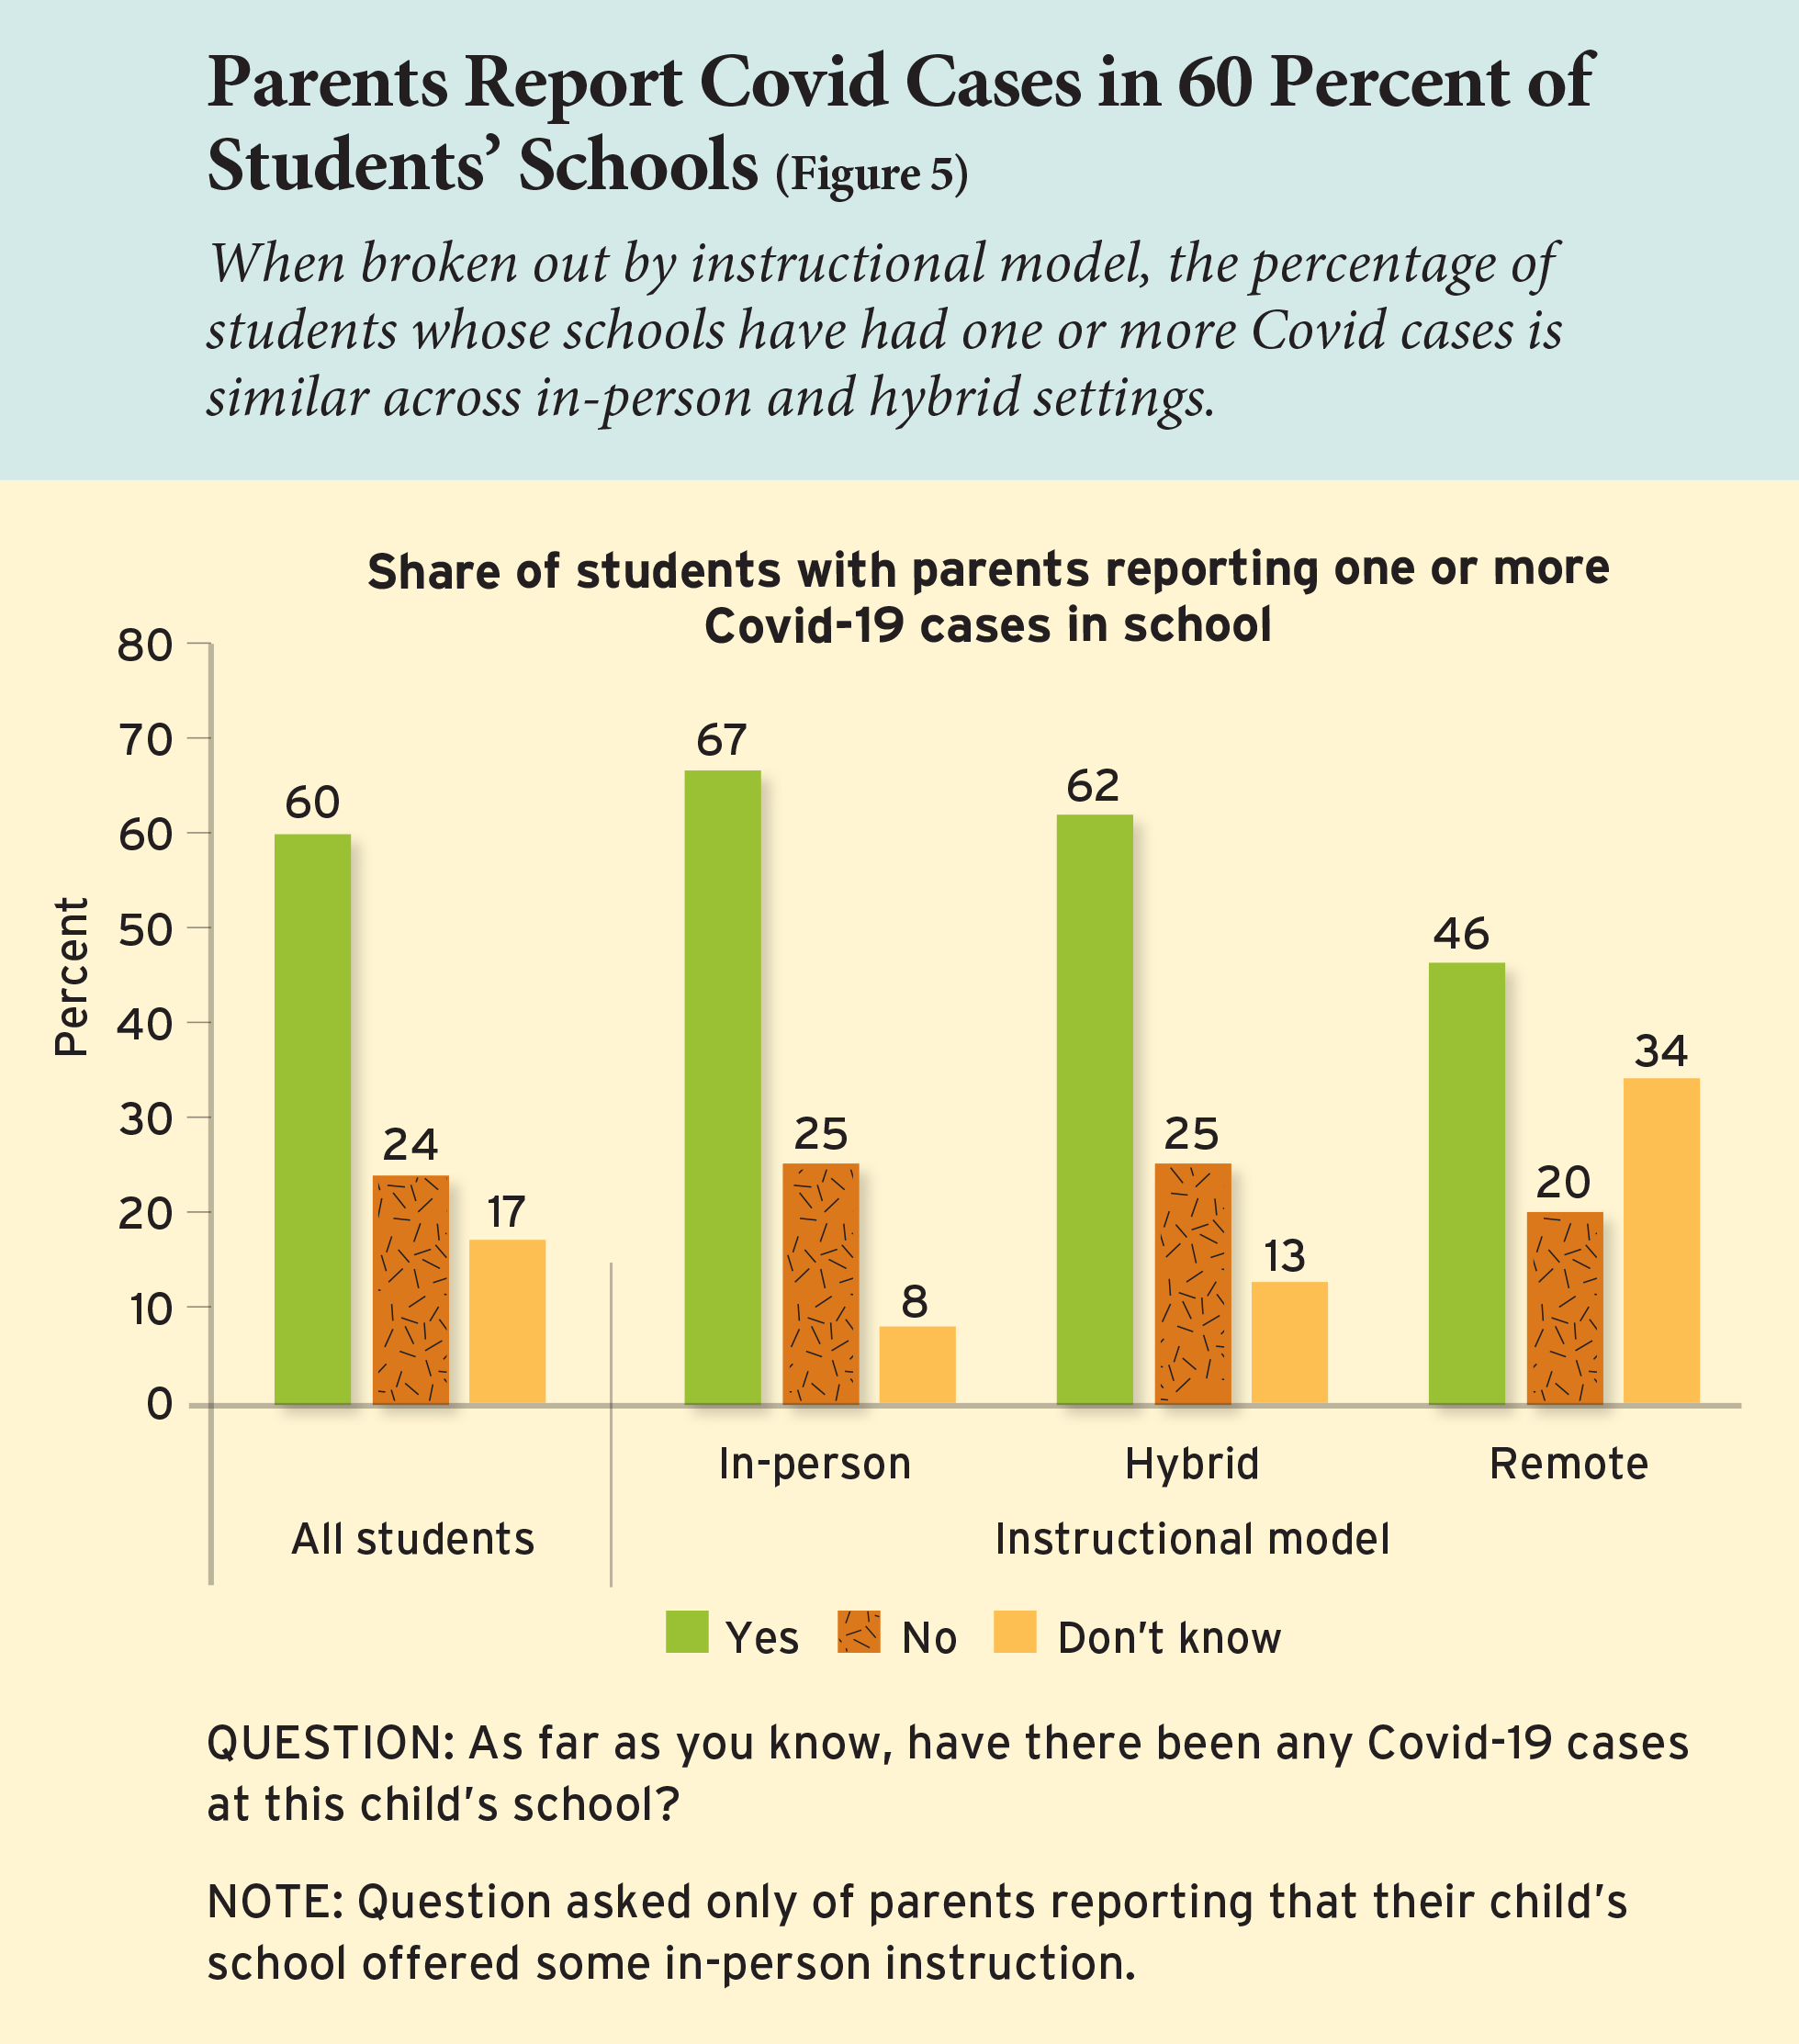 Parents Report Covid Cases in 60 Percent of Students’ Schools (Figure 5)